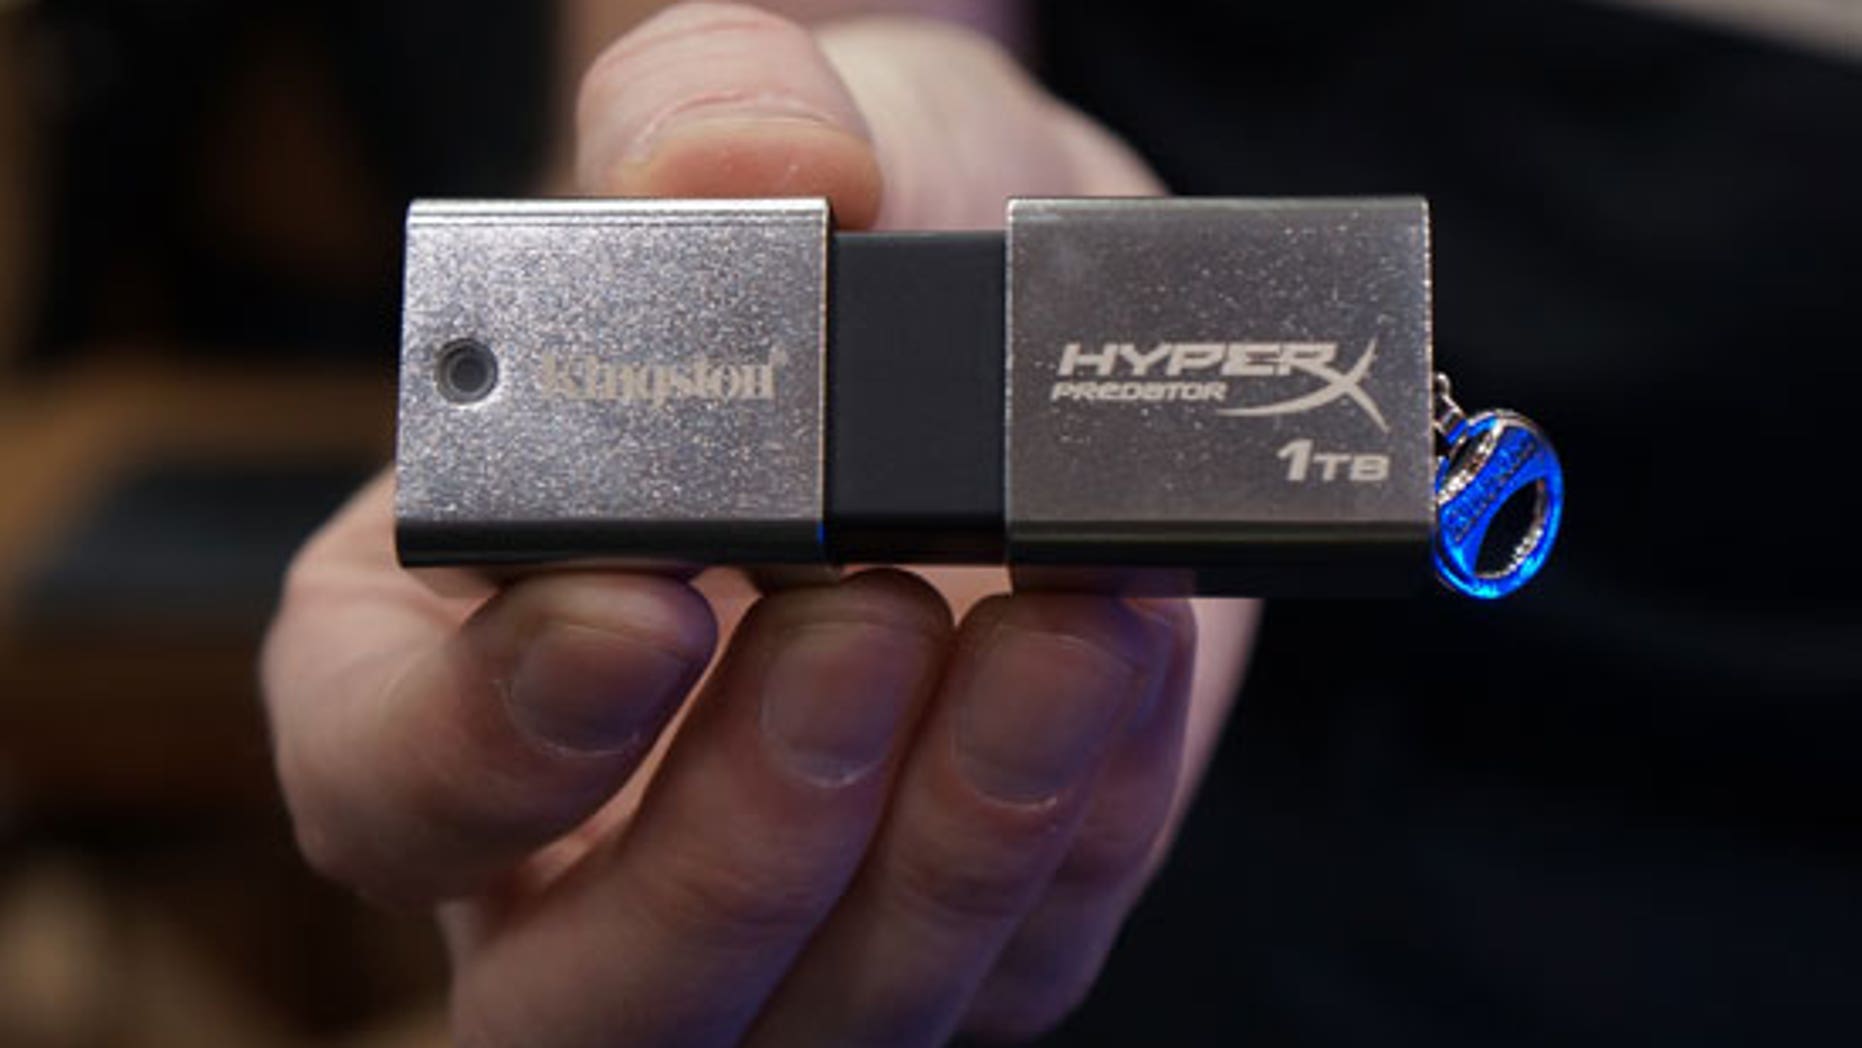 Kingston Announces World's Largest USB 3.0 Thumb Drive Fox News